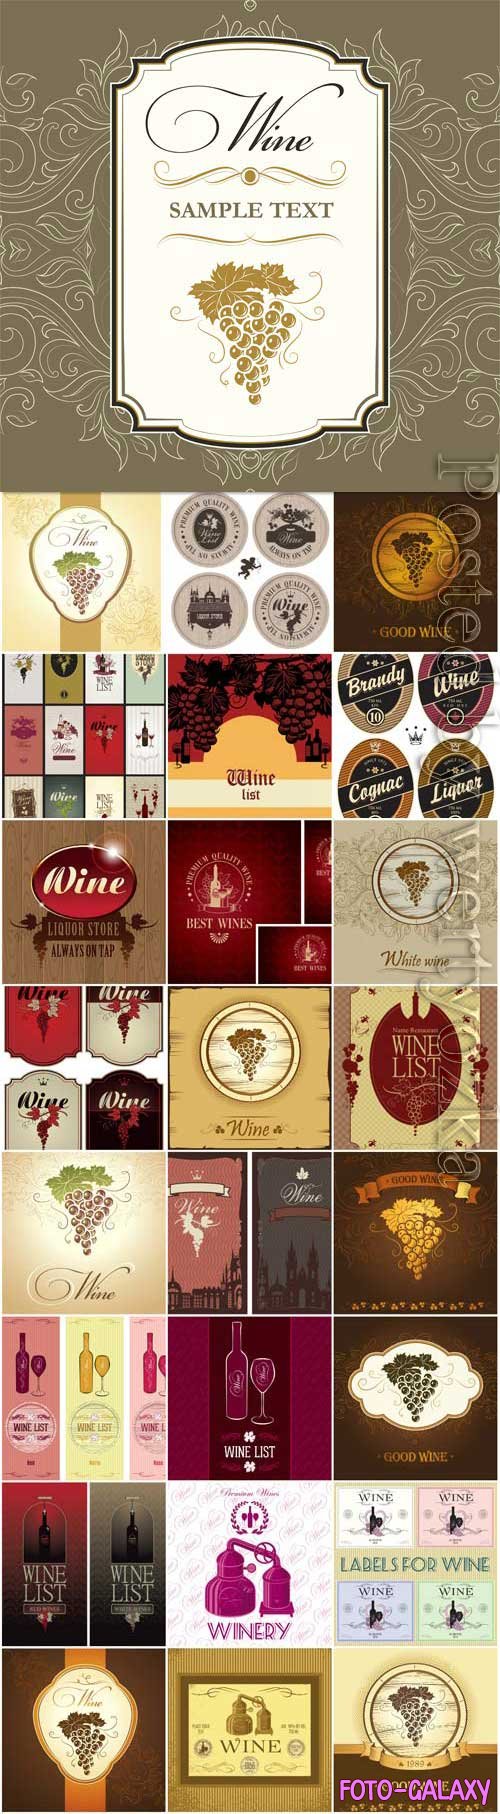 Retro wine labels for design in vector